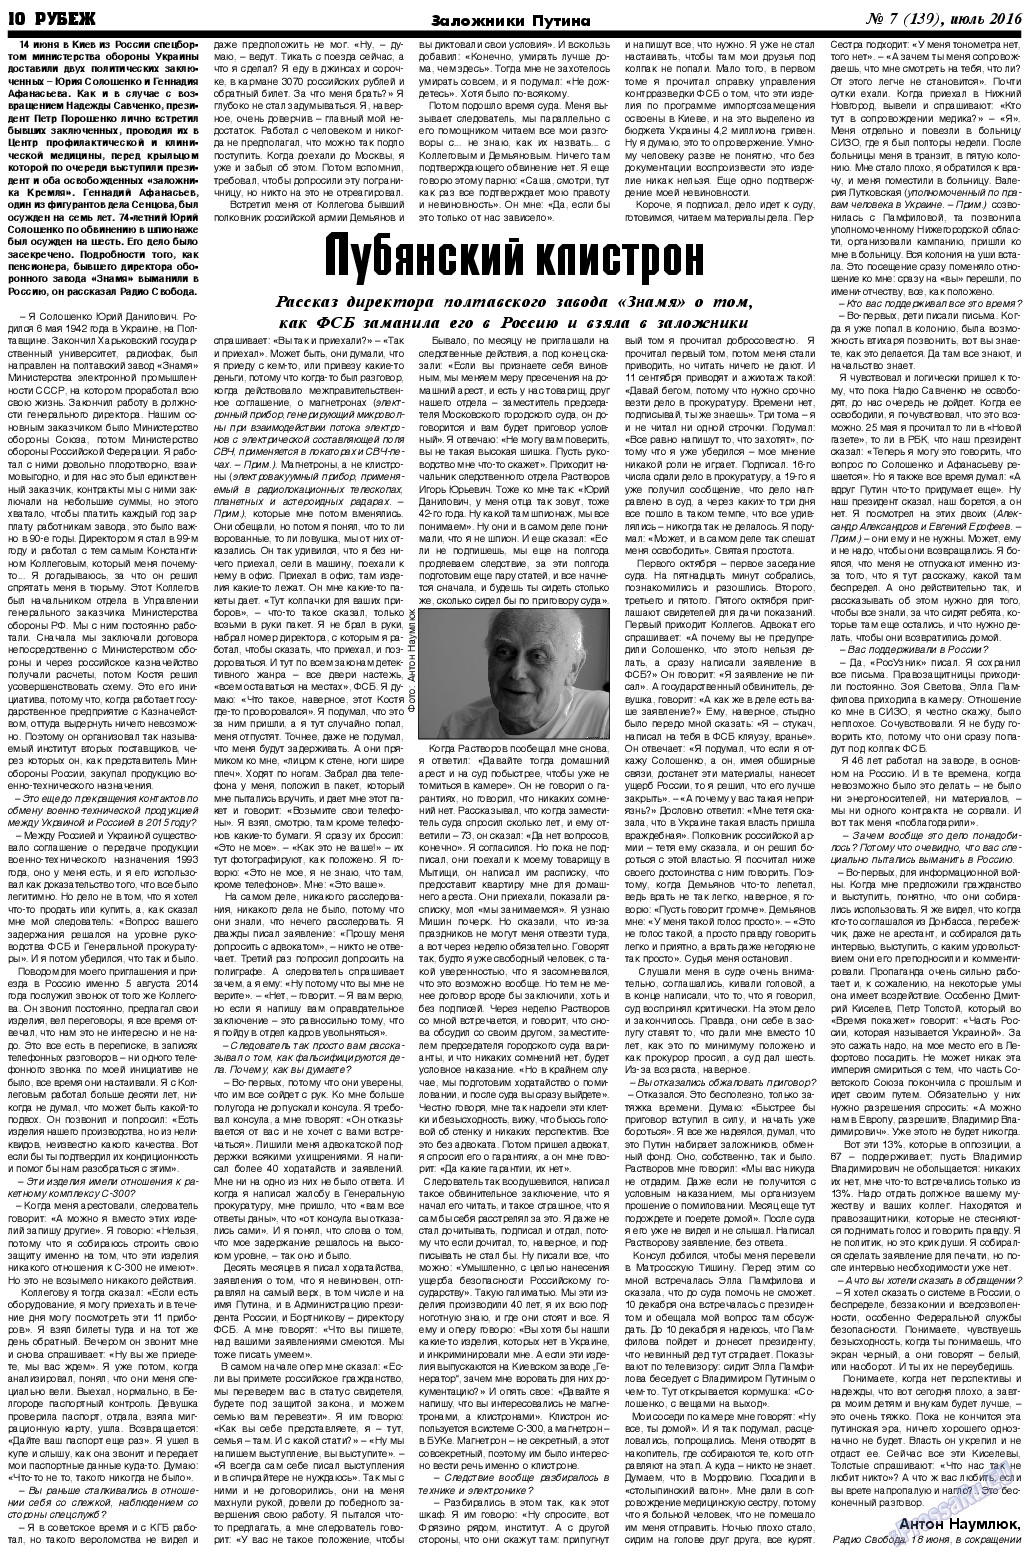 Рубеж, газета. 2016 №7 стр.10